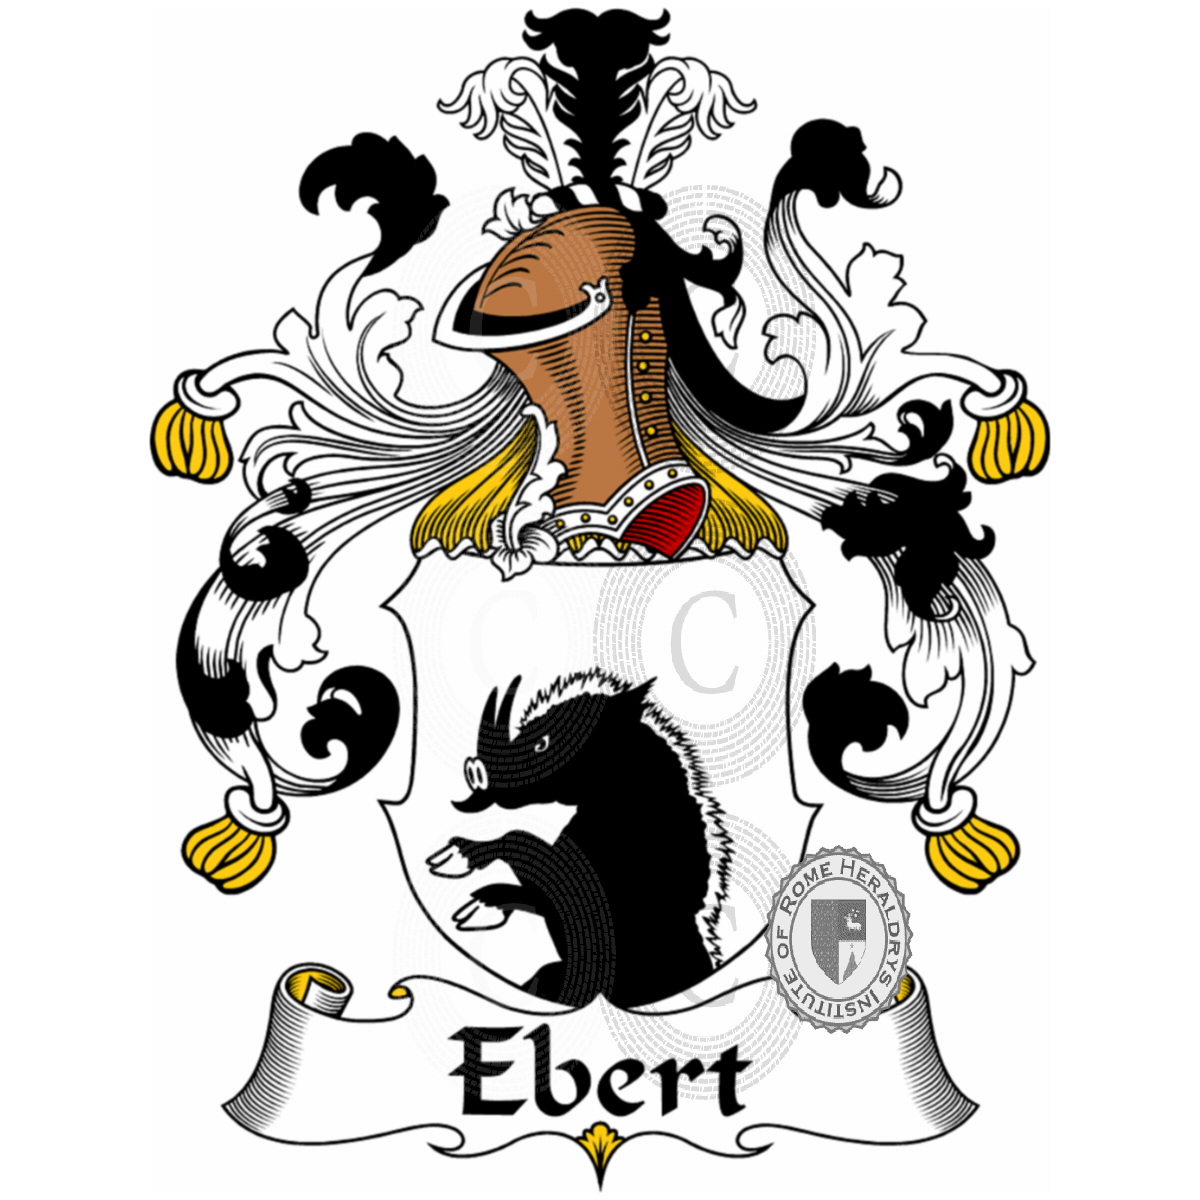 Brasão da famíliaEbert, Ebbert,Ebertus